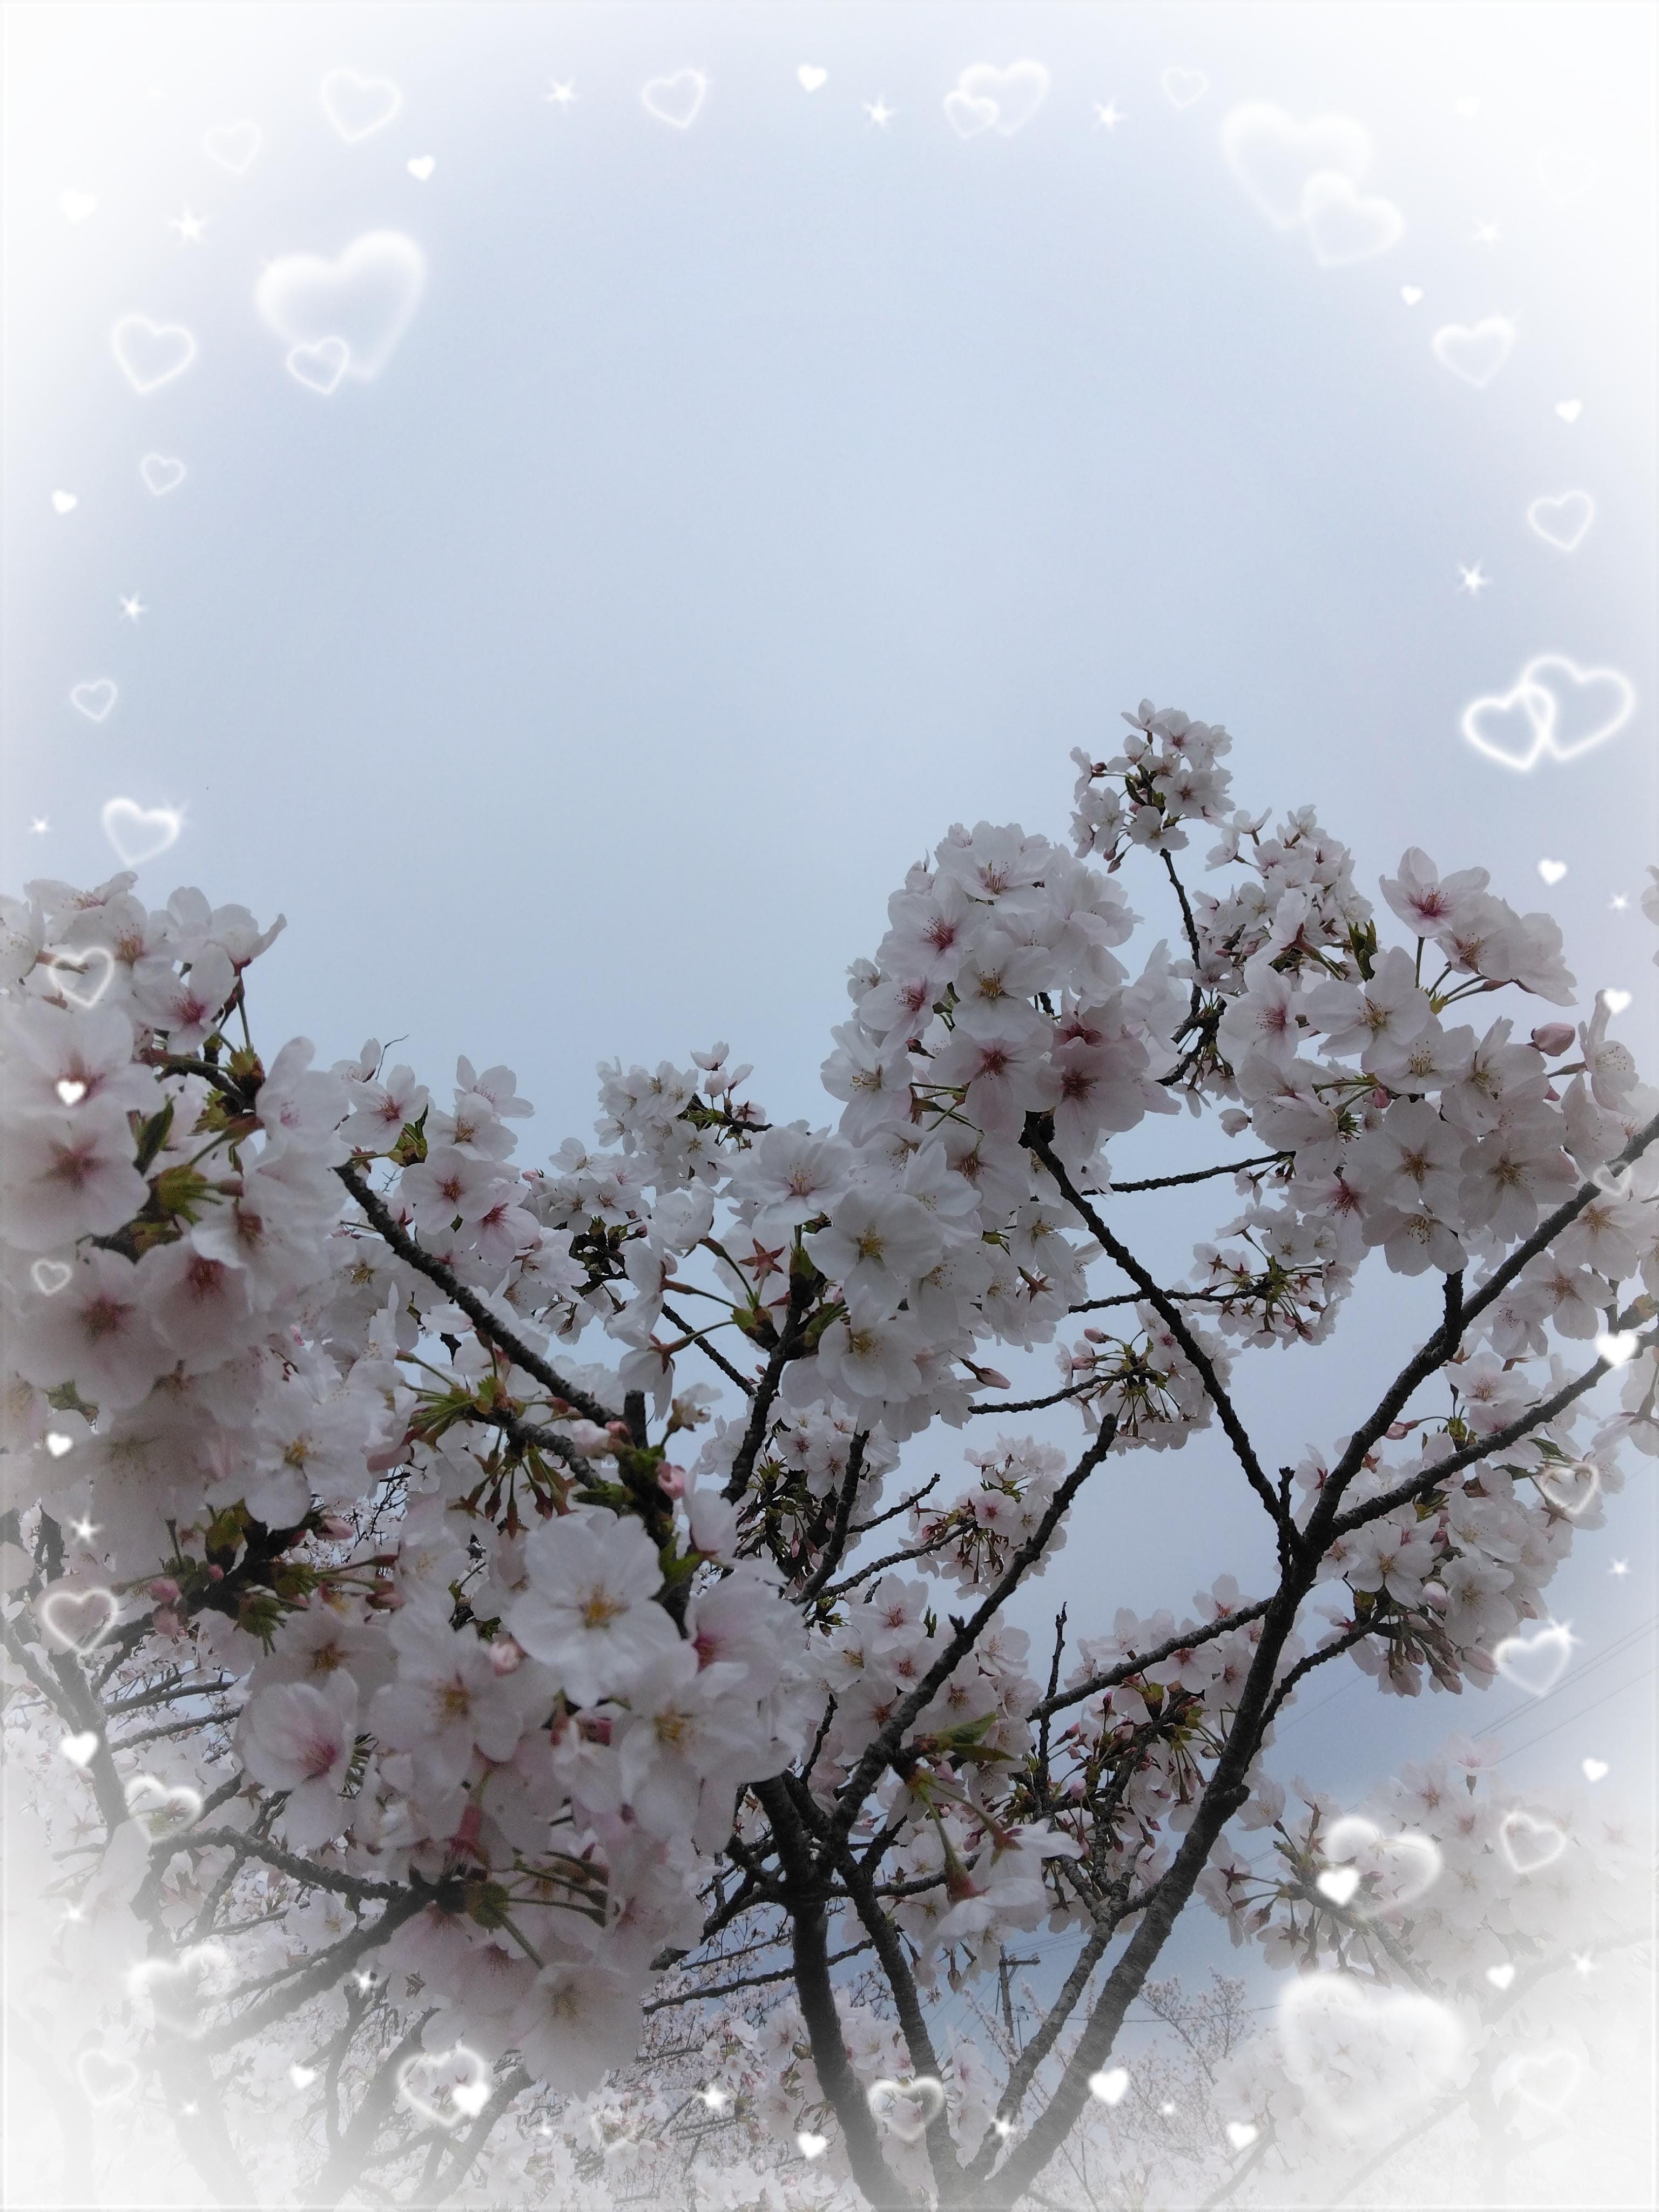 「新年度」04/09(火) 12:46 | 野島紫乃の写メ日記